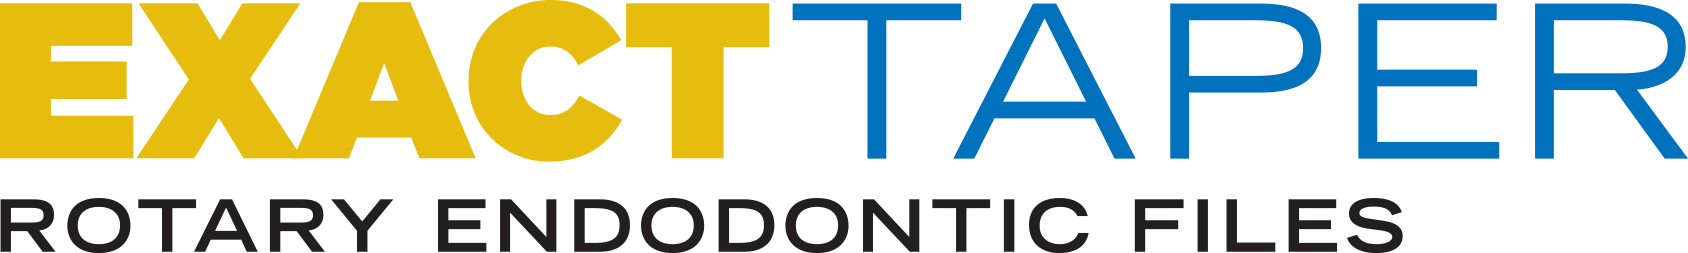 Exact Taper logo